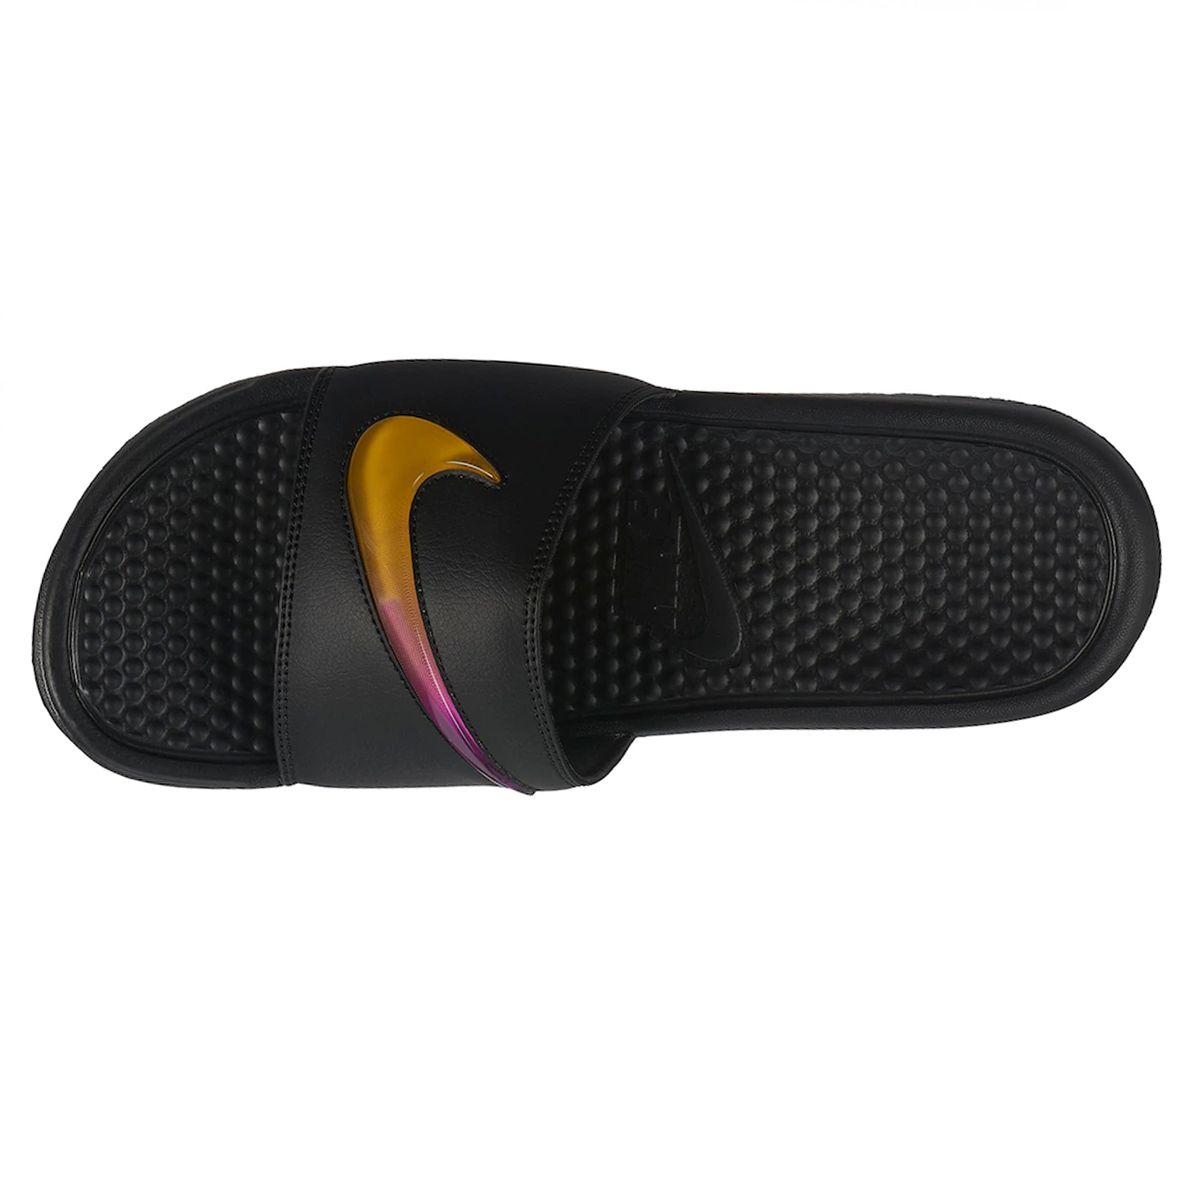 Nike Benassi Jdi Se Mens Style : Aj6745-002